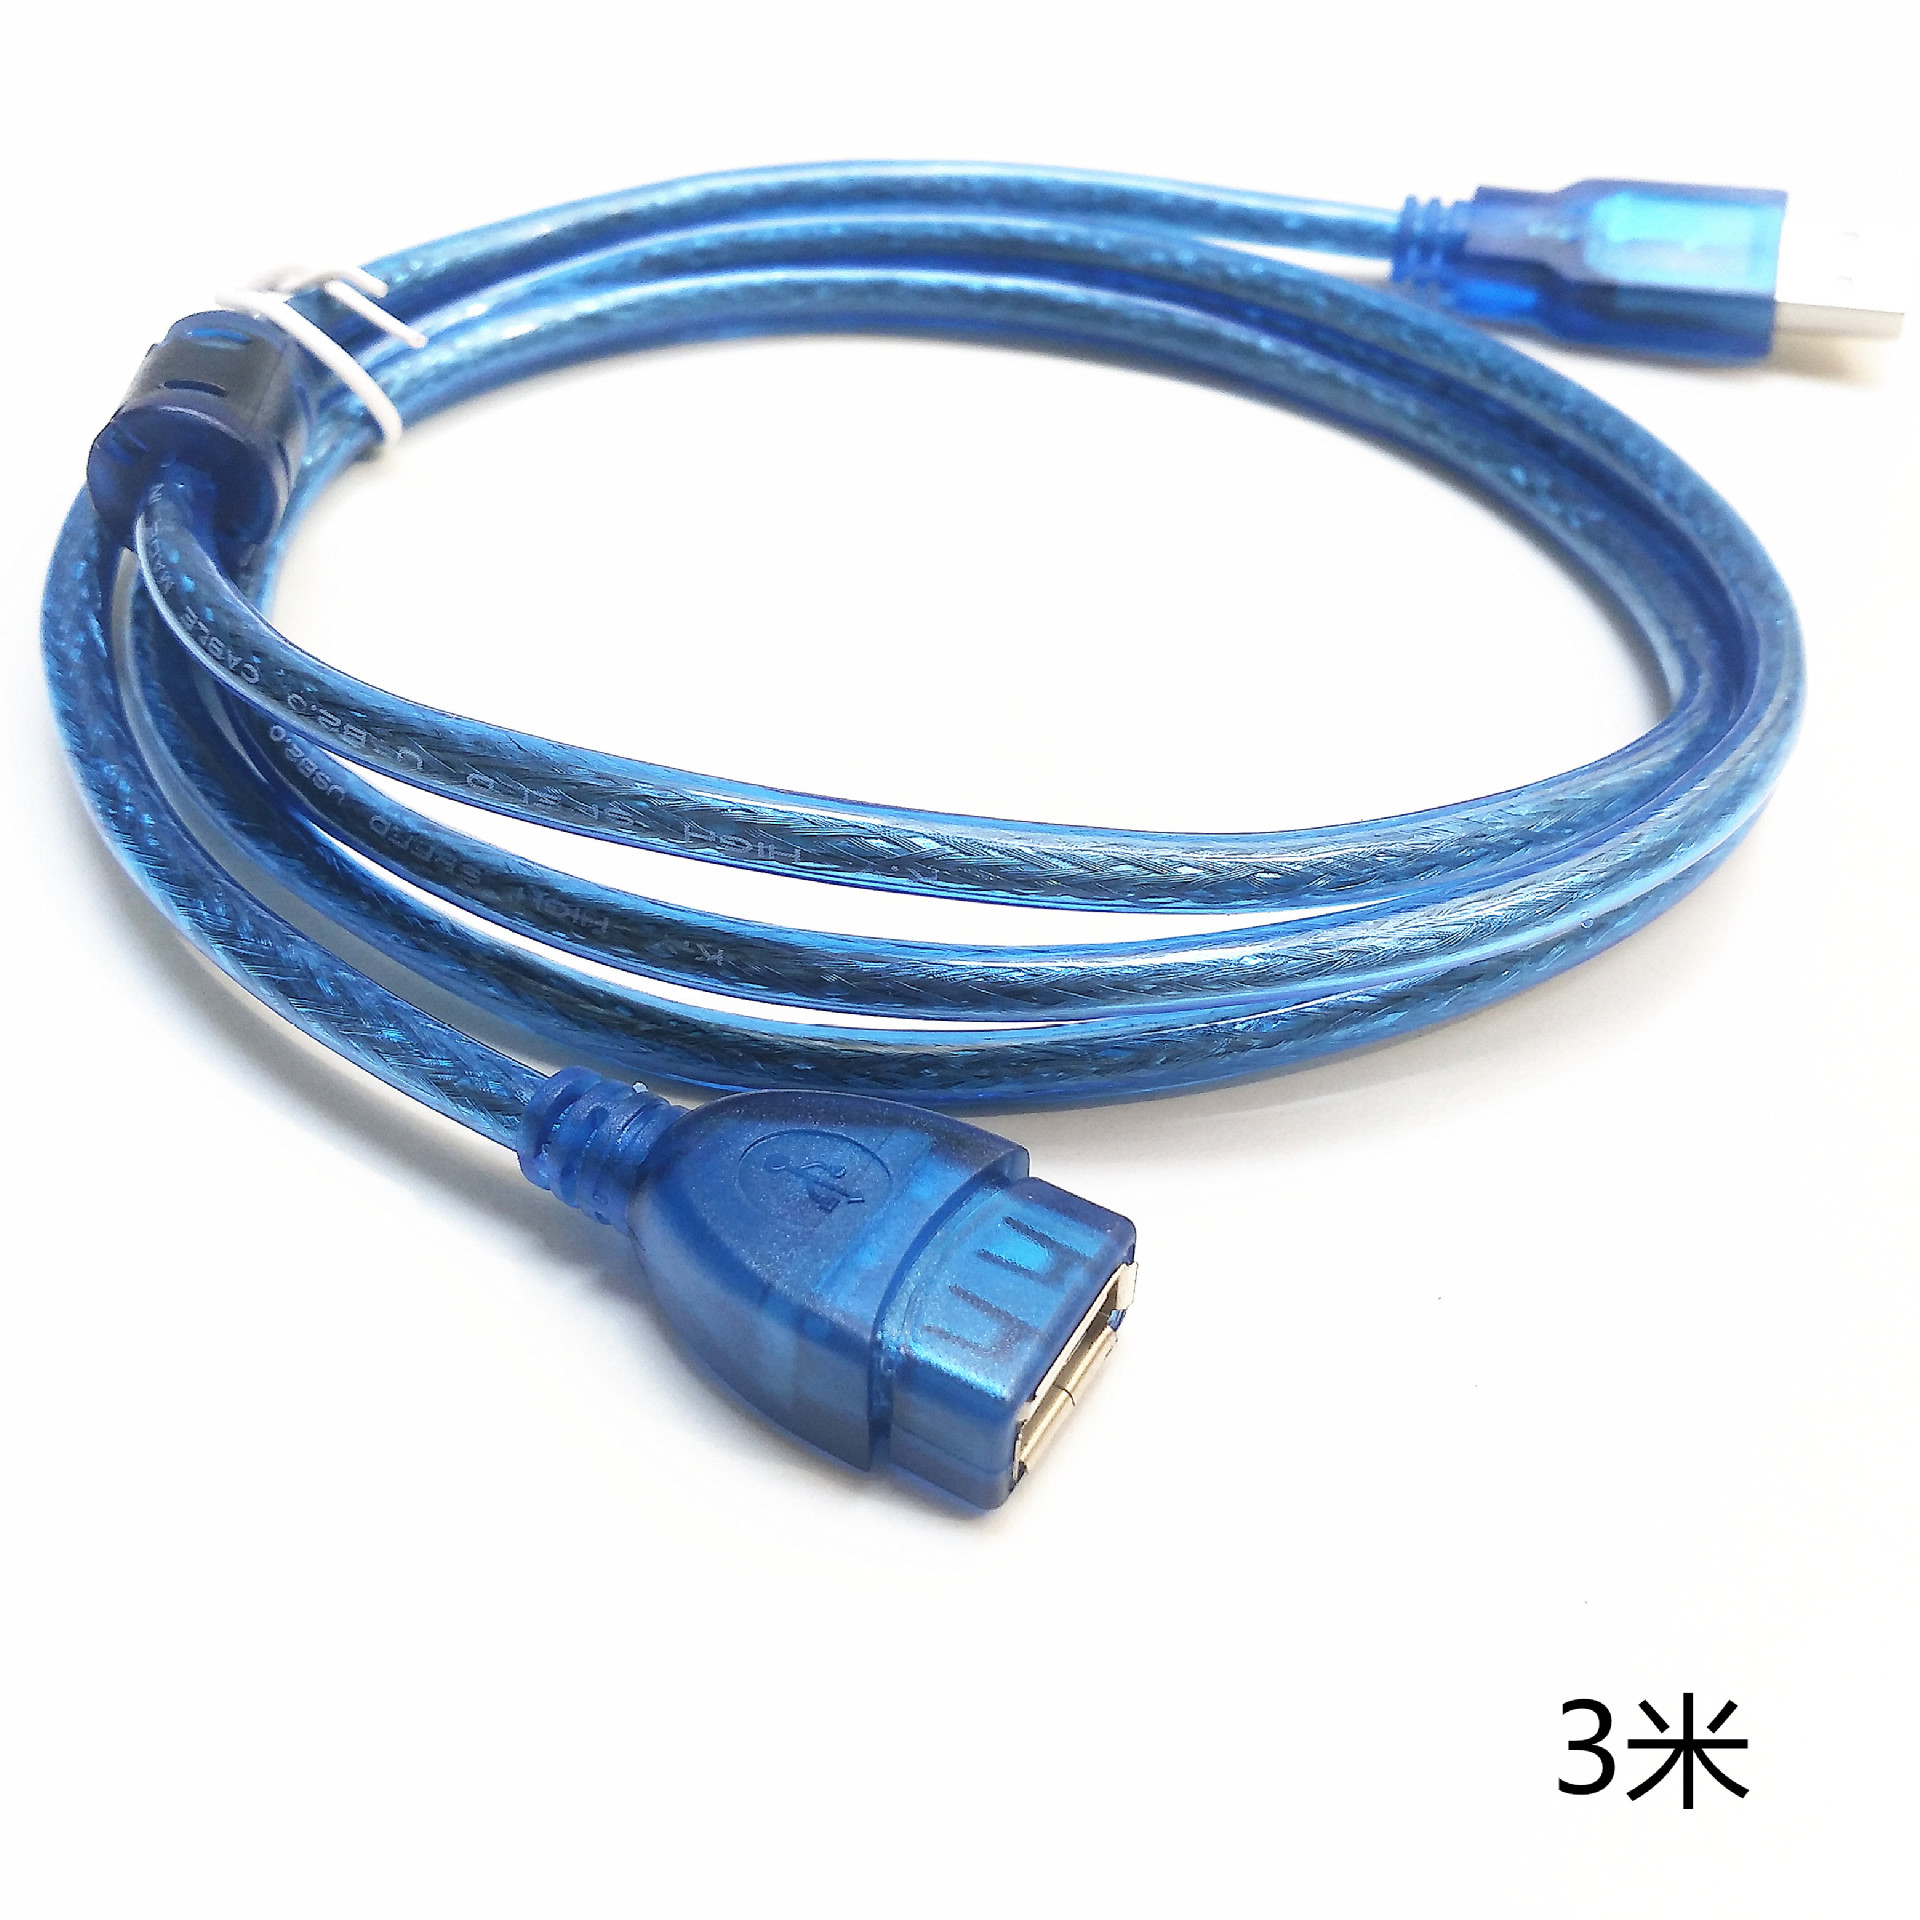 Blue usb cable photo